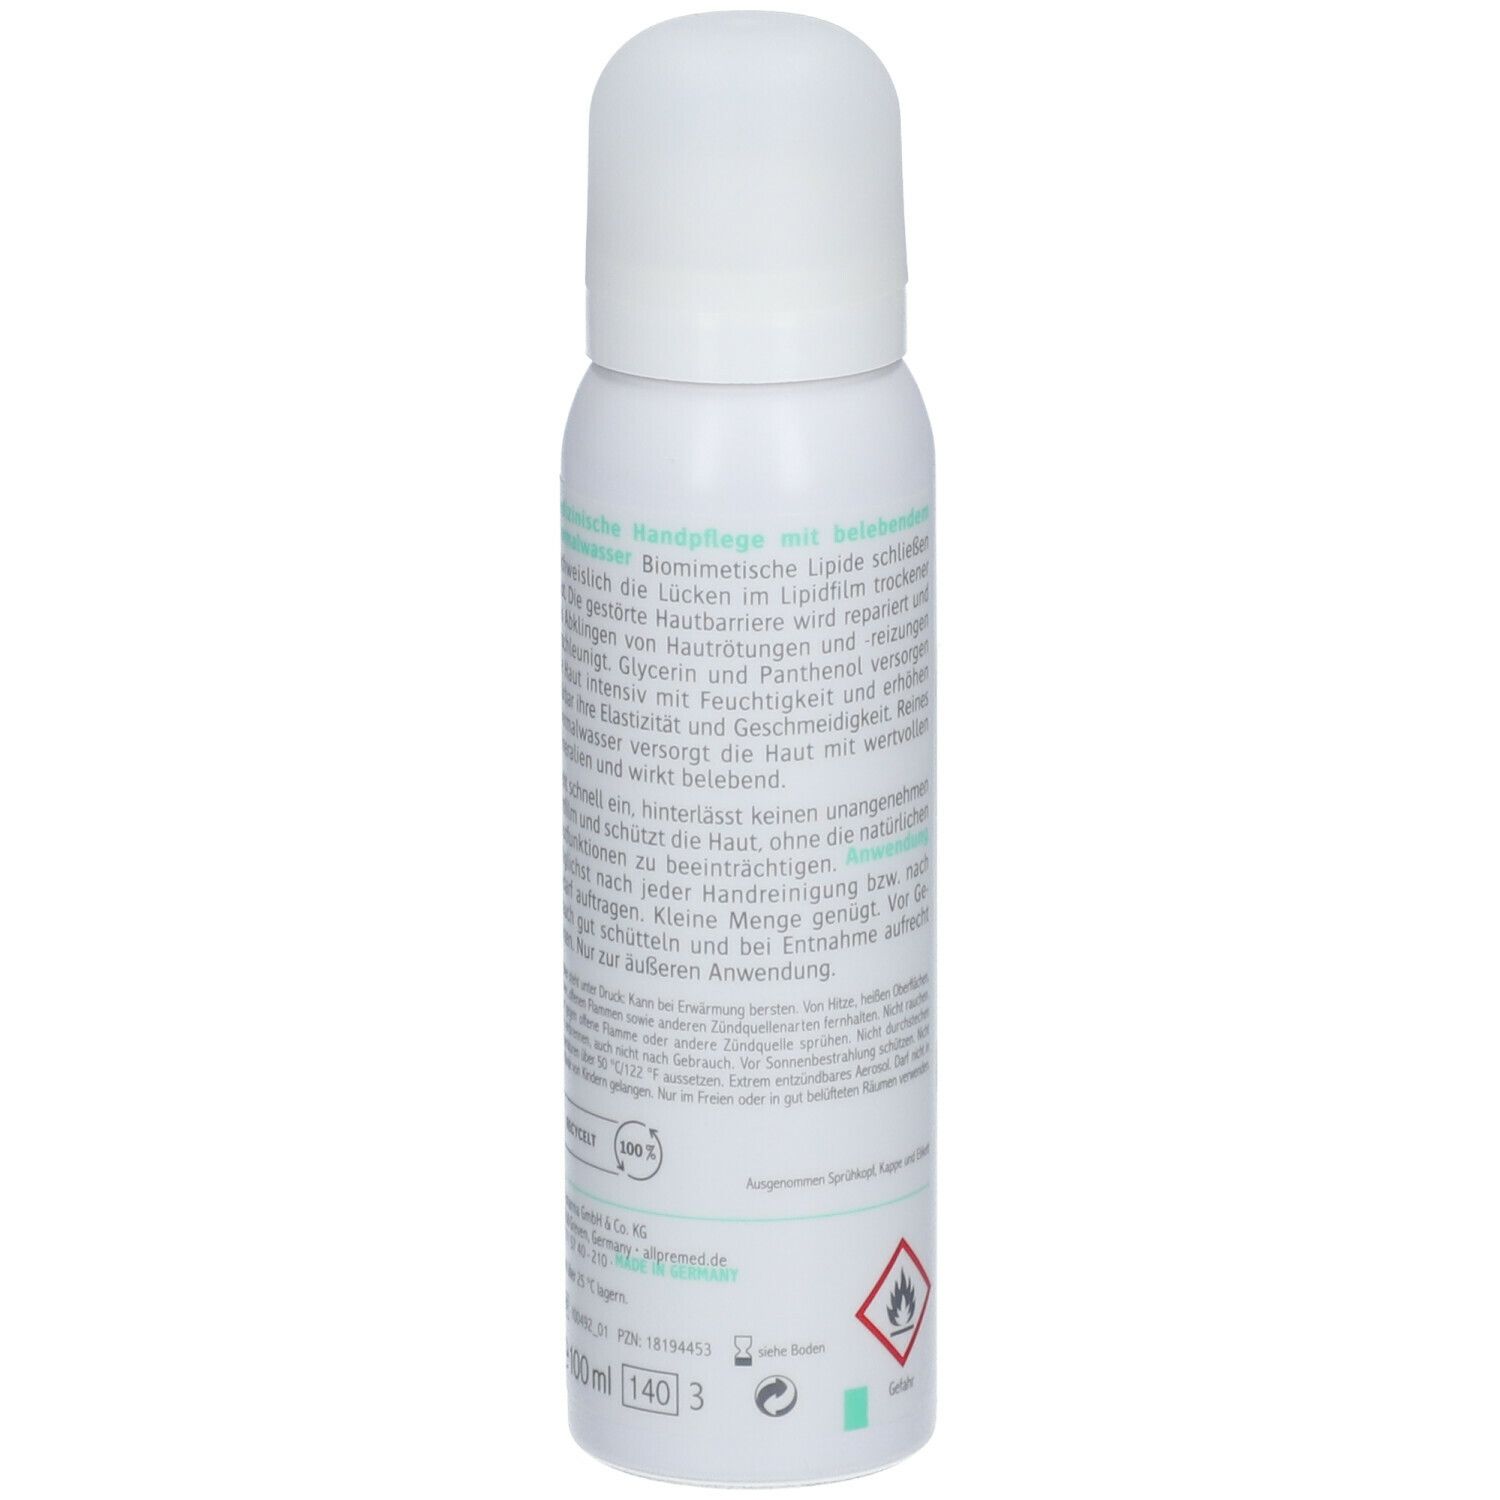 Allpremed® hand expert Lipid Schaum-Creme REPAIR Thermal